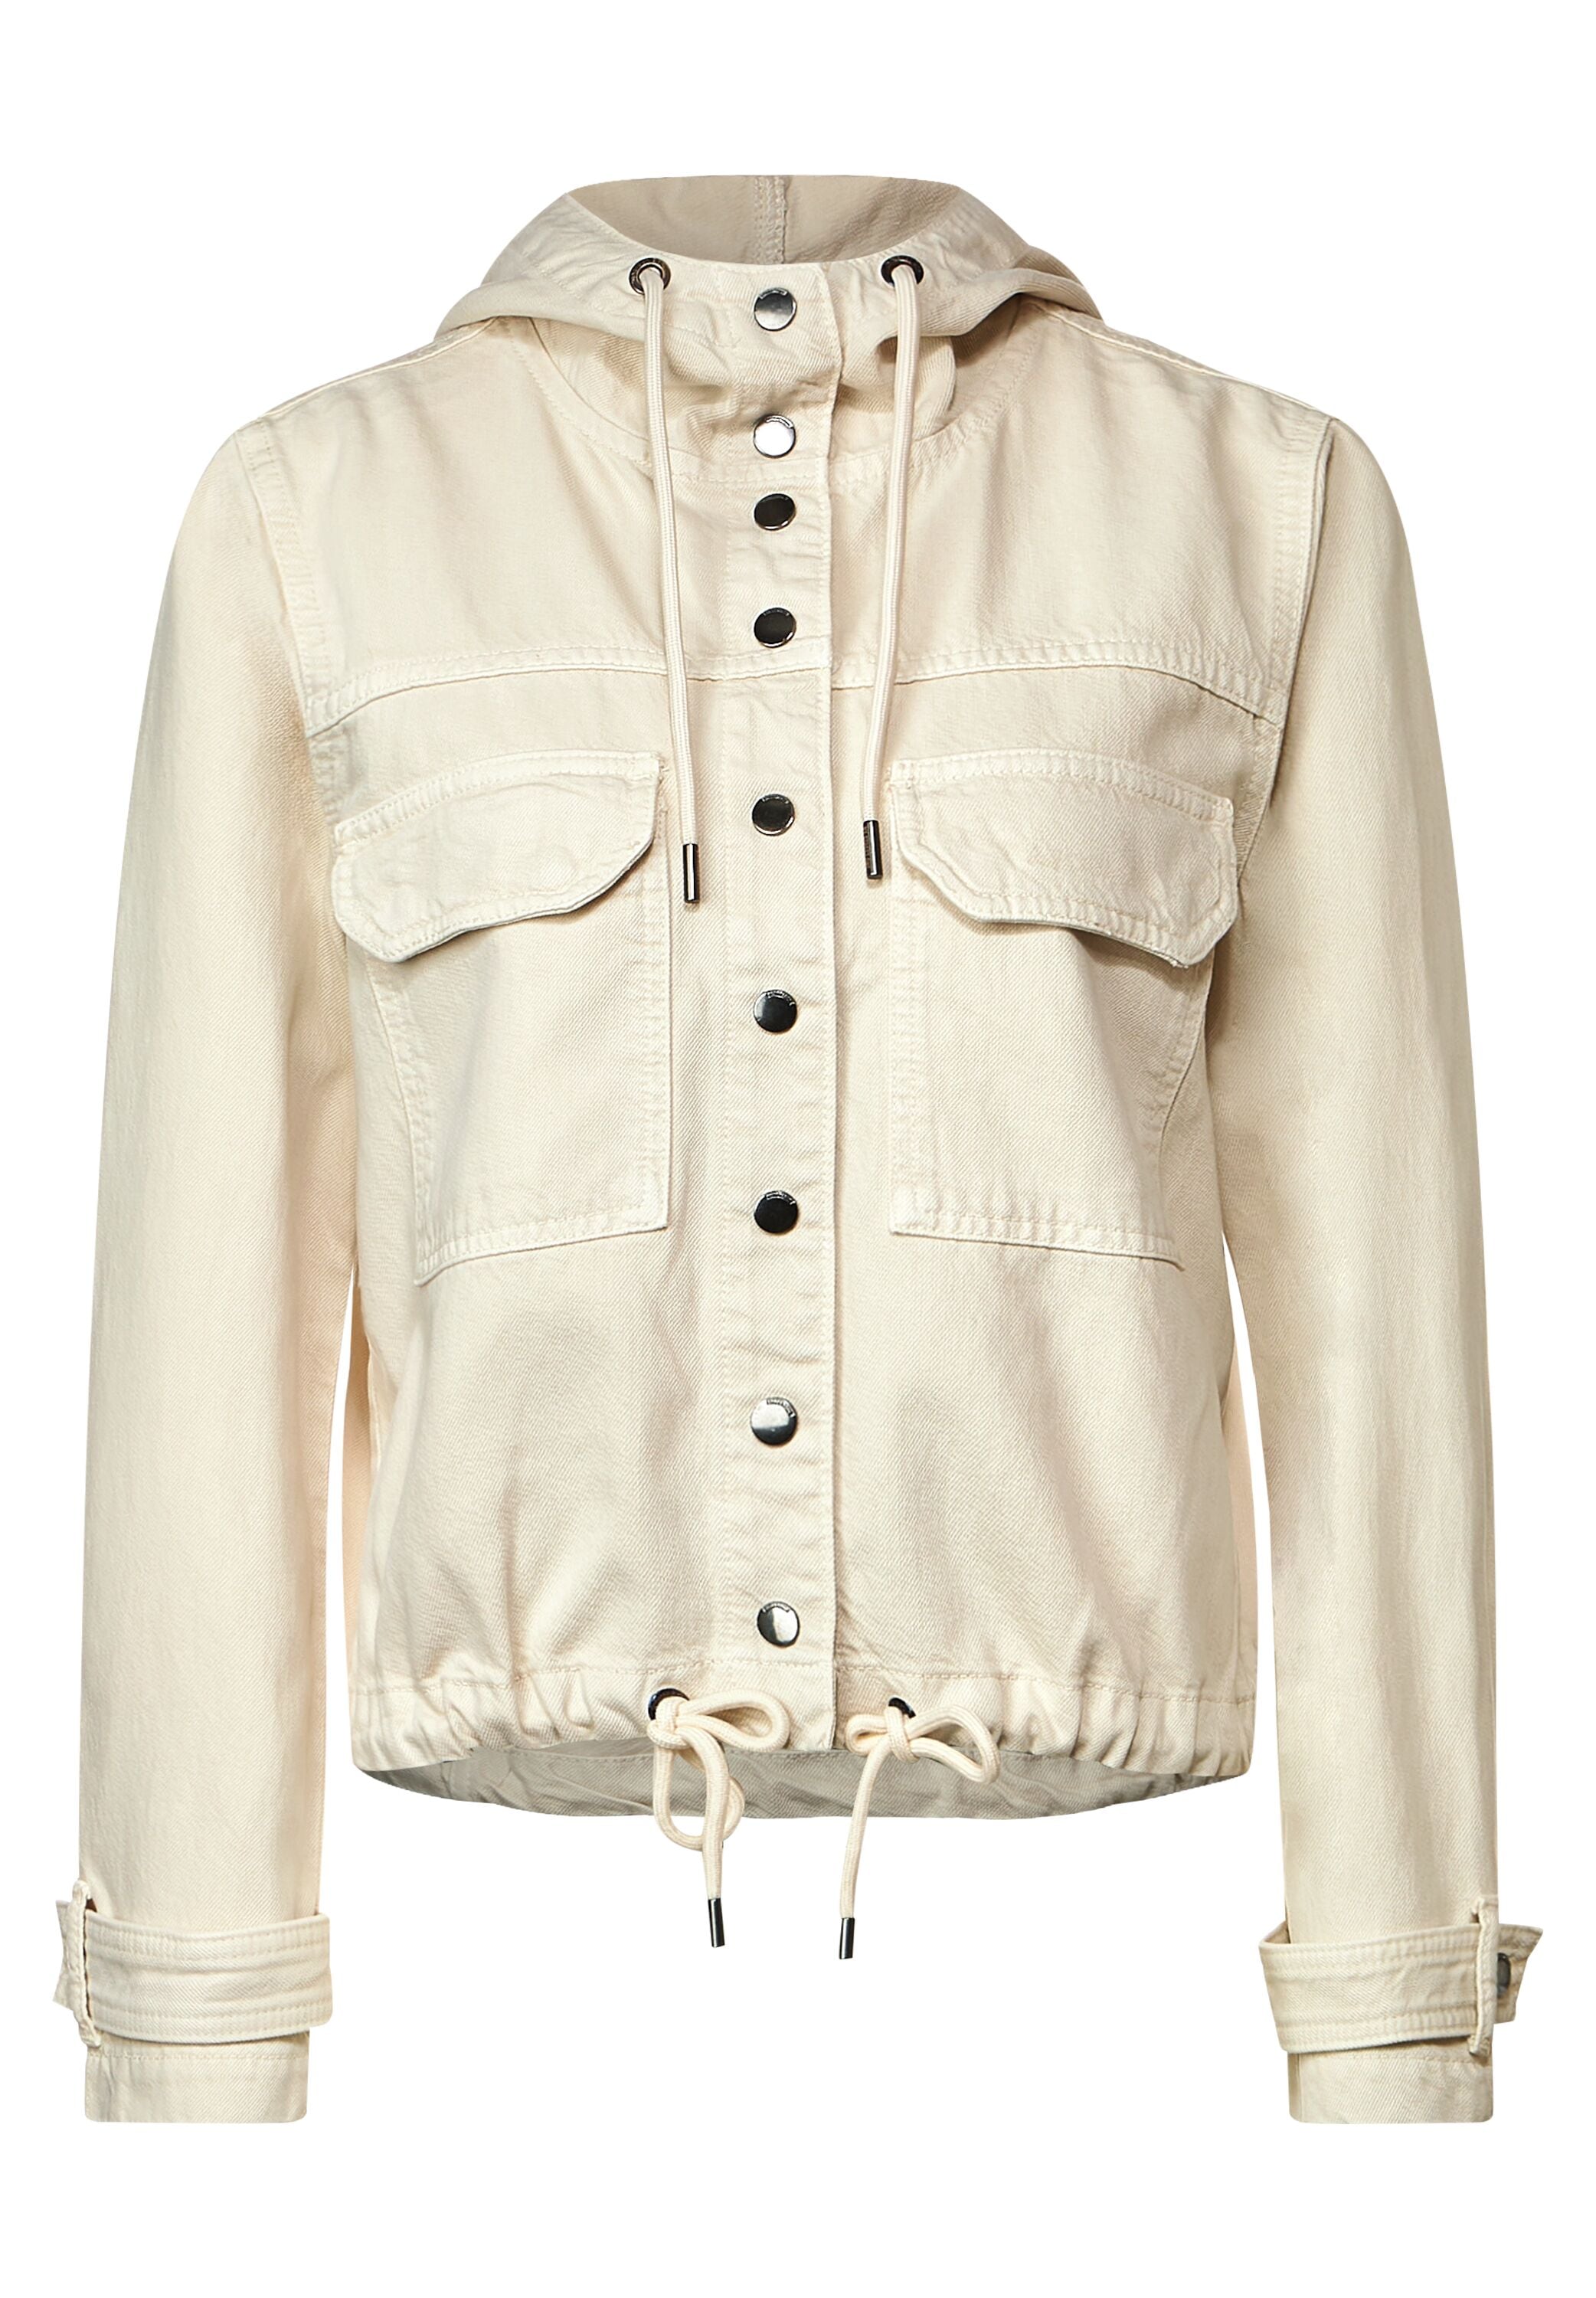 STREET ONE Jeansjacke, mit Kapuze, aus softem Materialmix kaufen | Shirtjacken